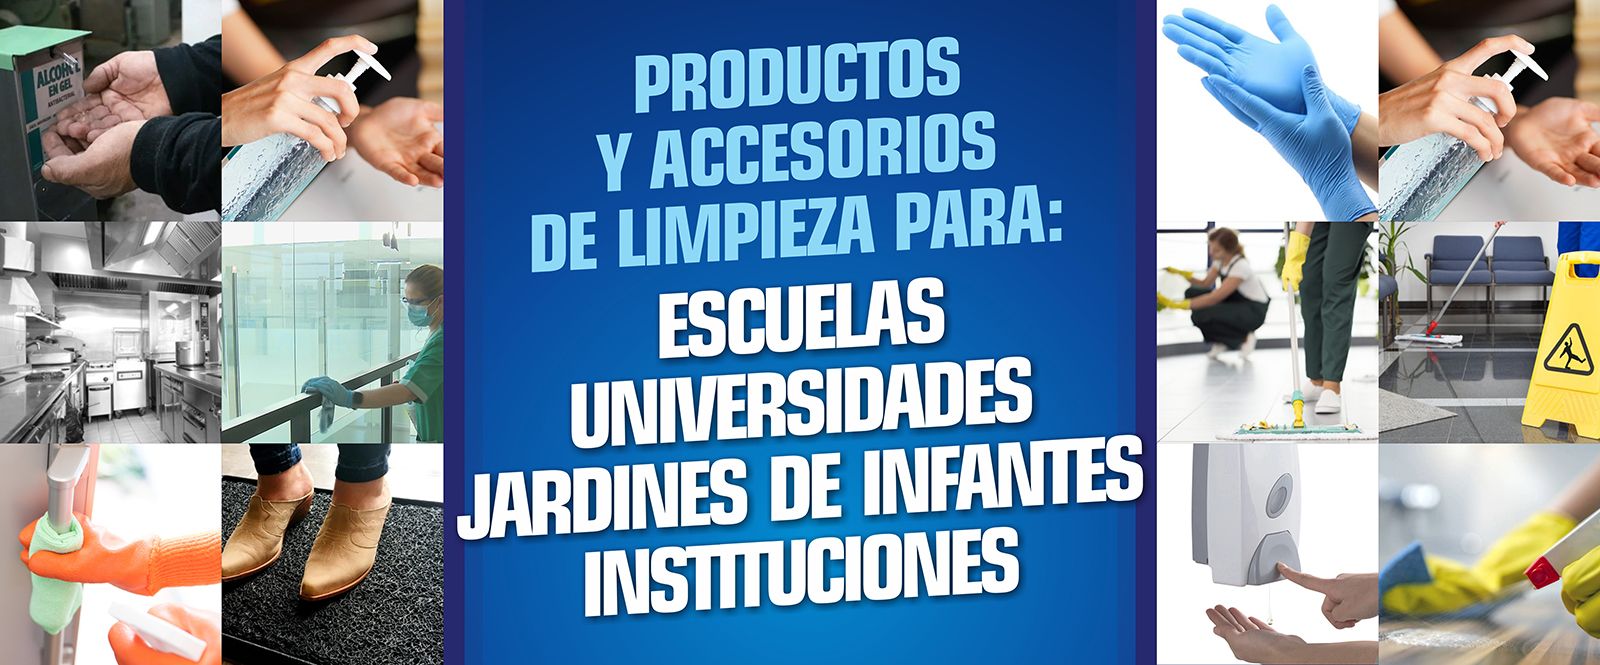 ESCUELAS - UNIVERSIDADES - JARDINES DE INFANTES - INSTITUCIONES